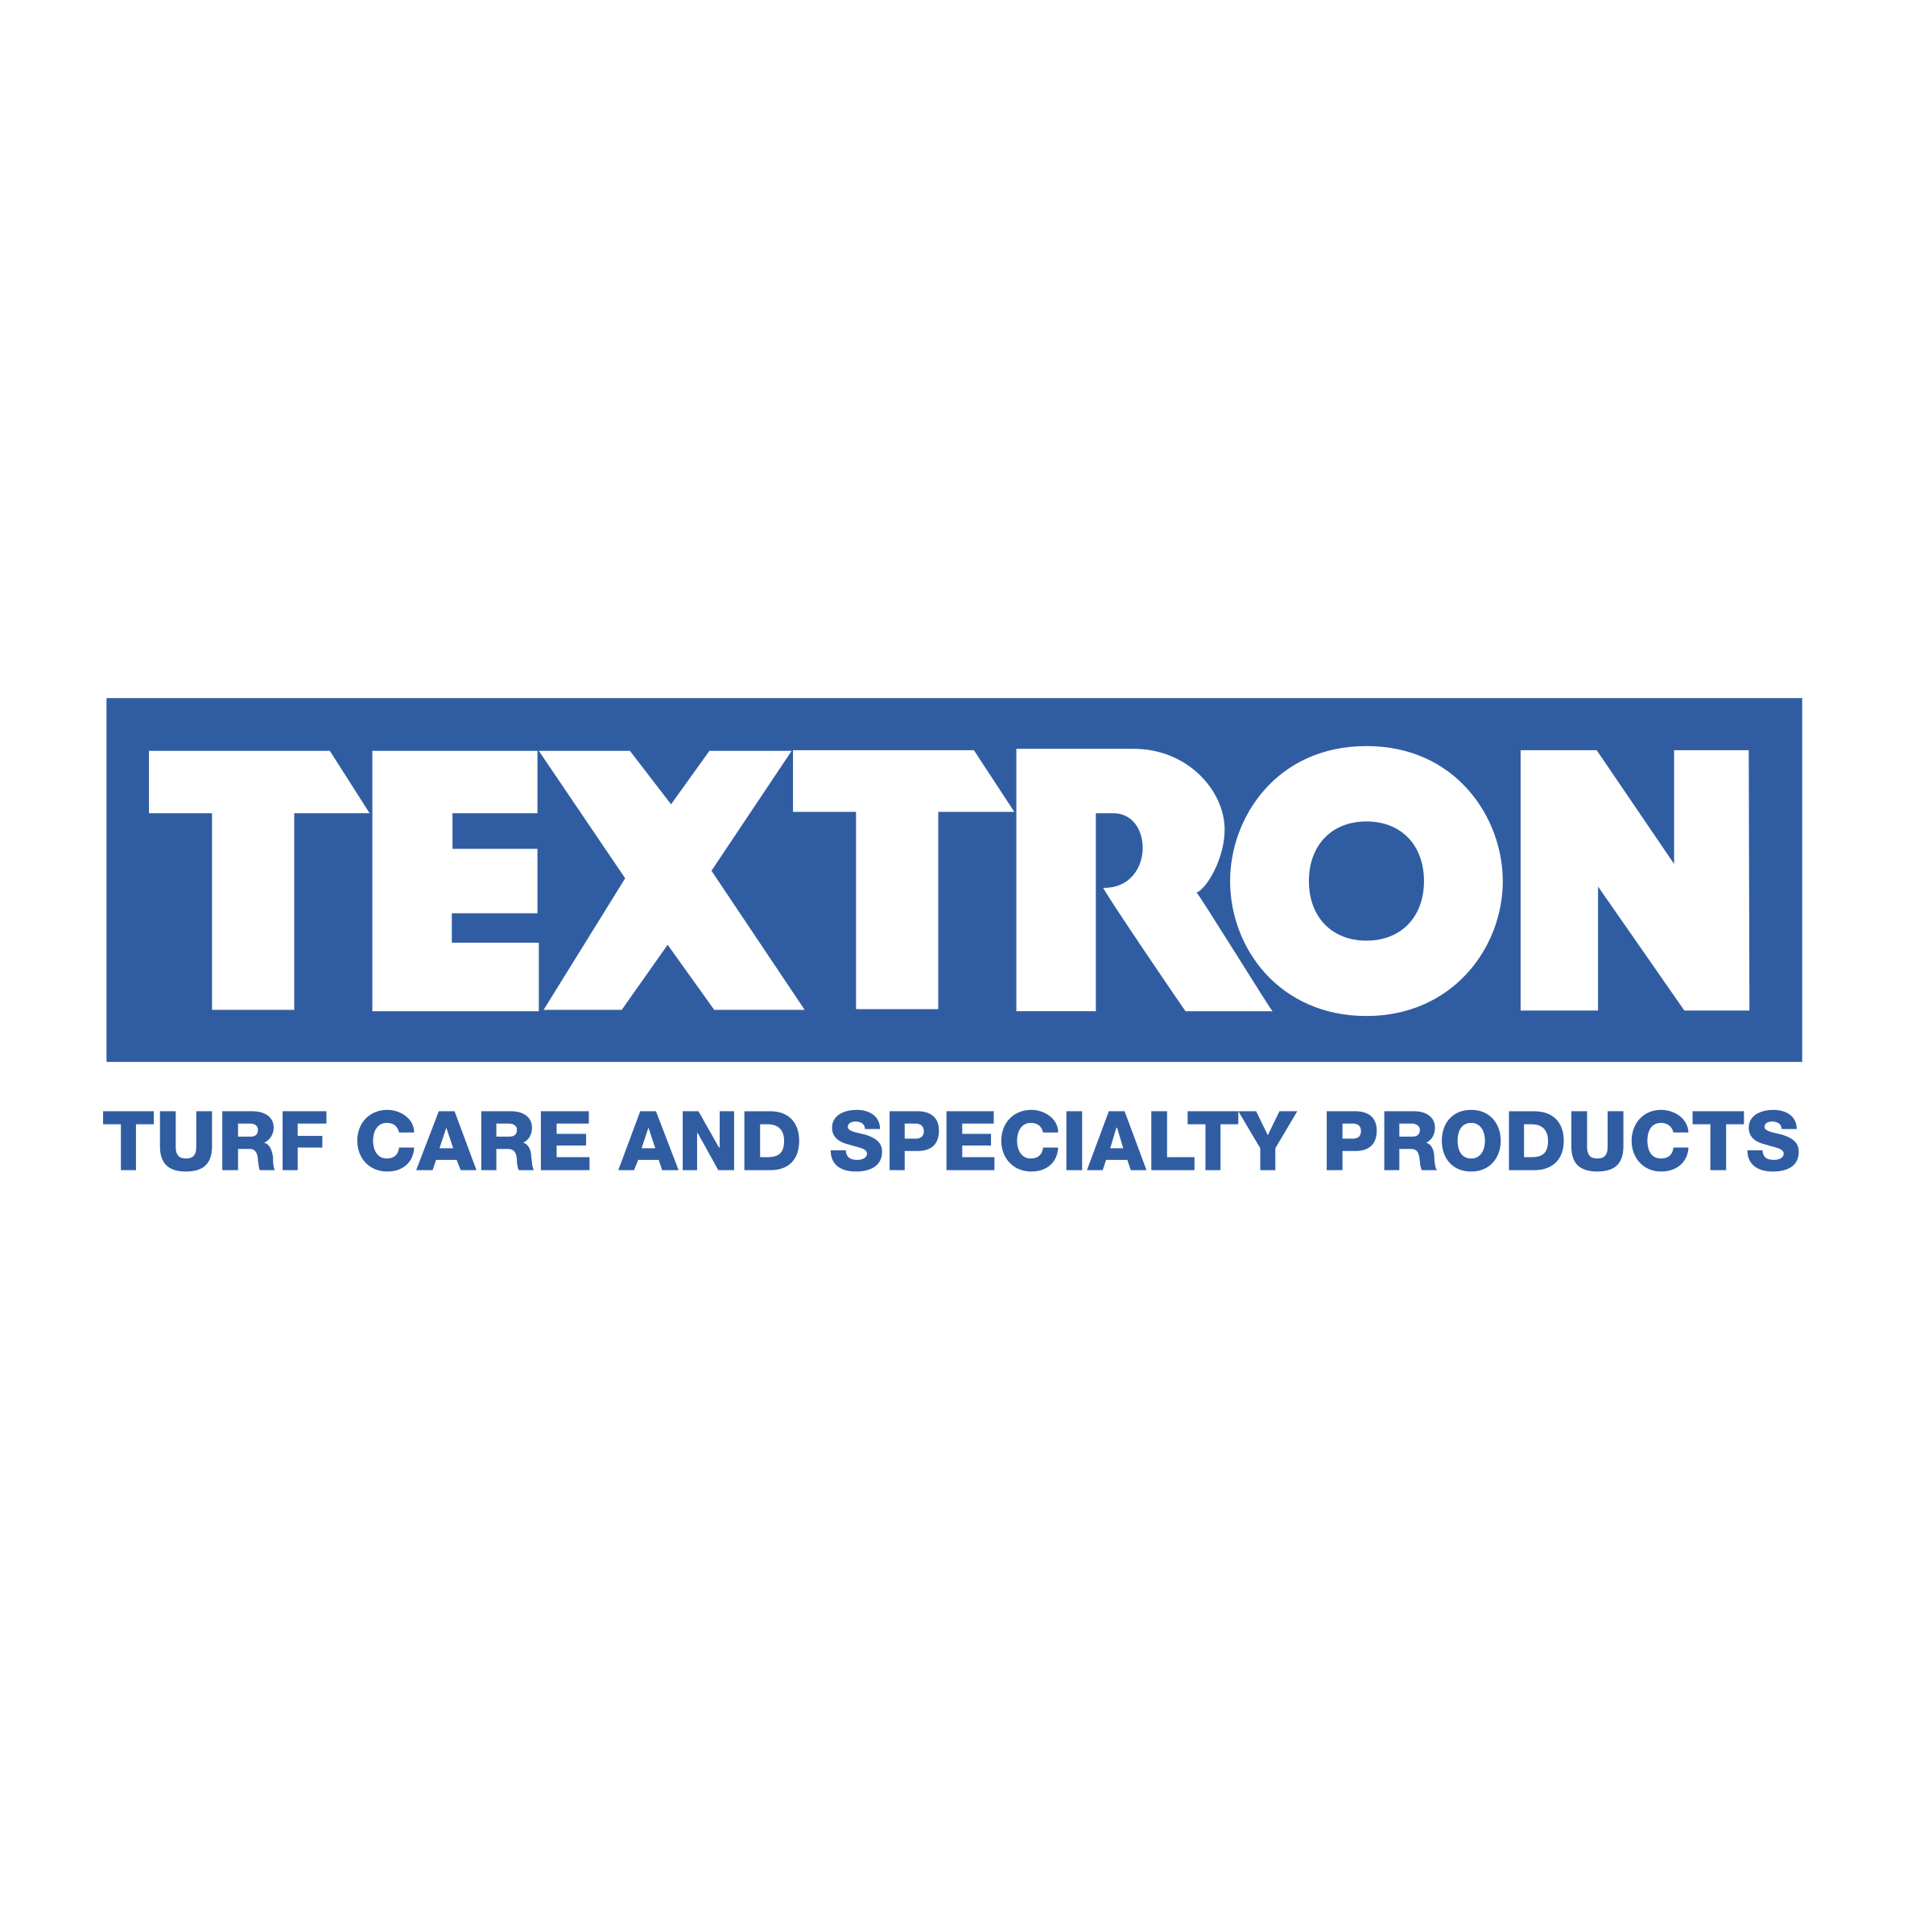 Textron Logo - Textron Logo PNG Transparent & SVG Vector